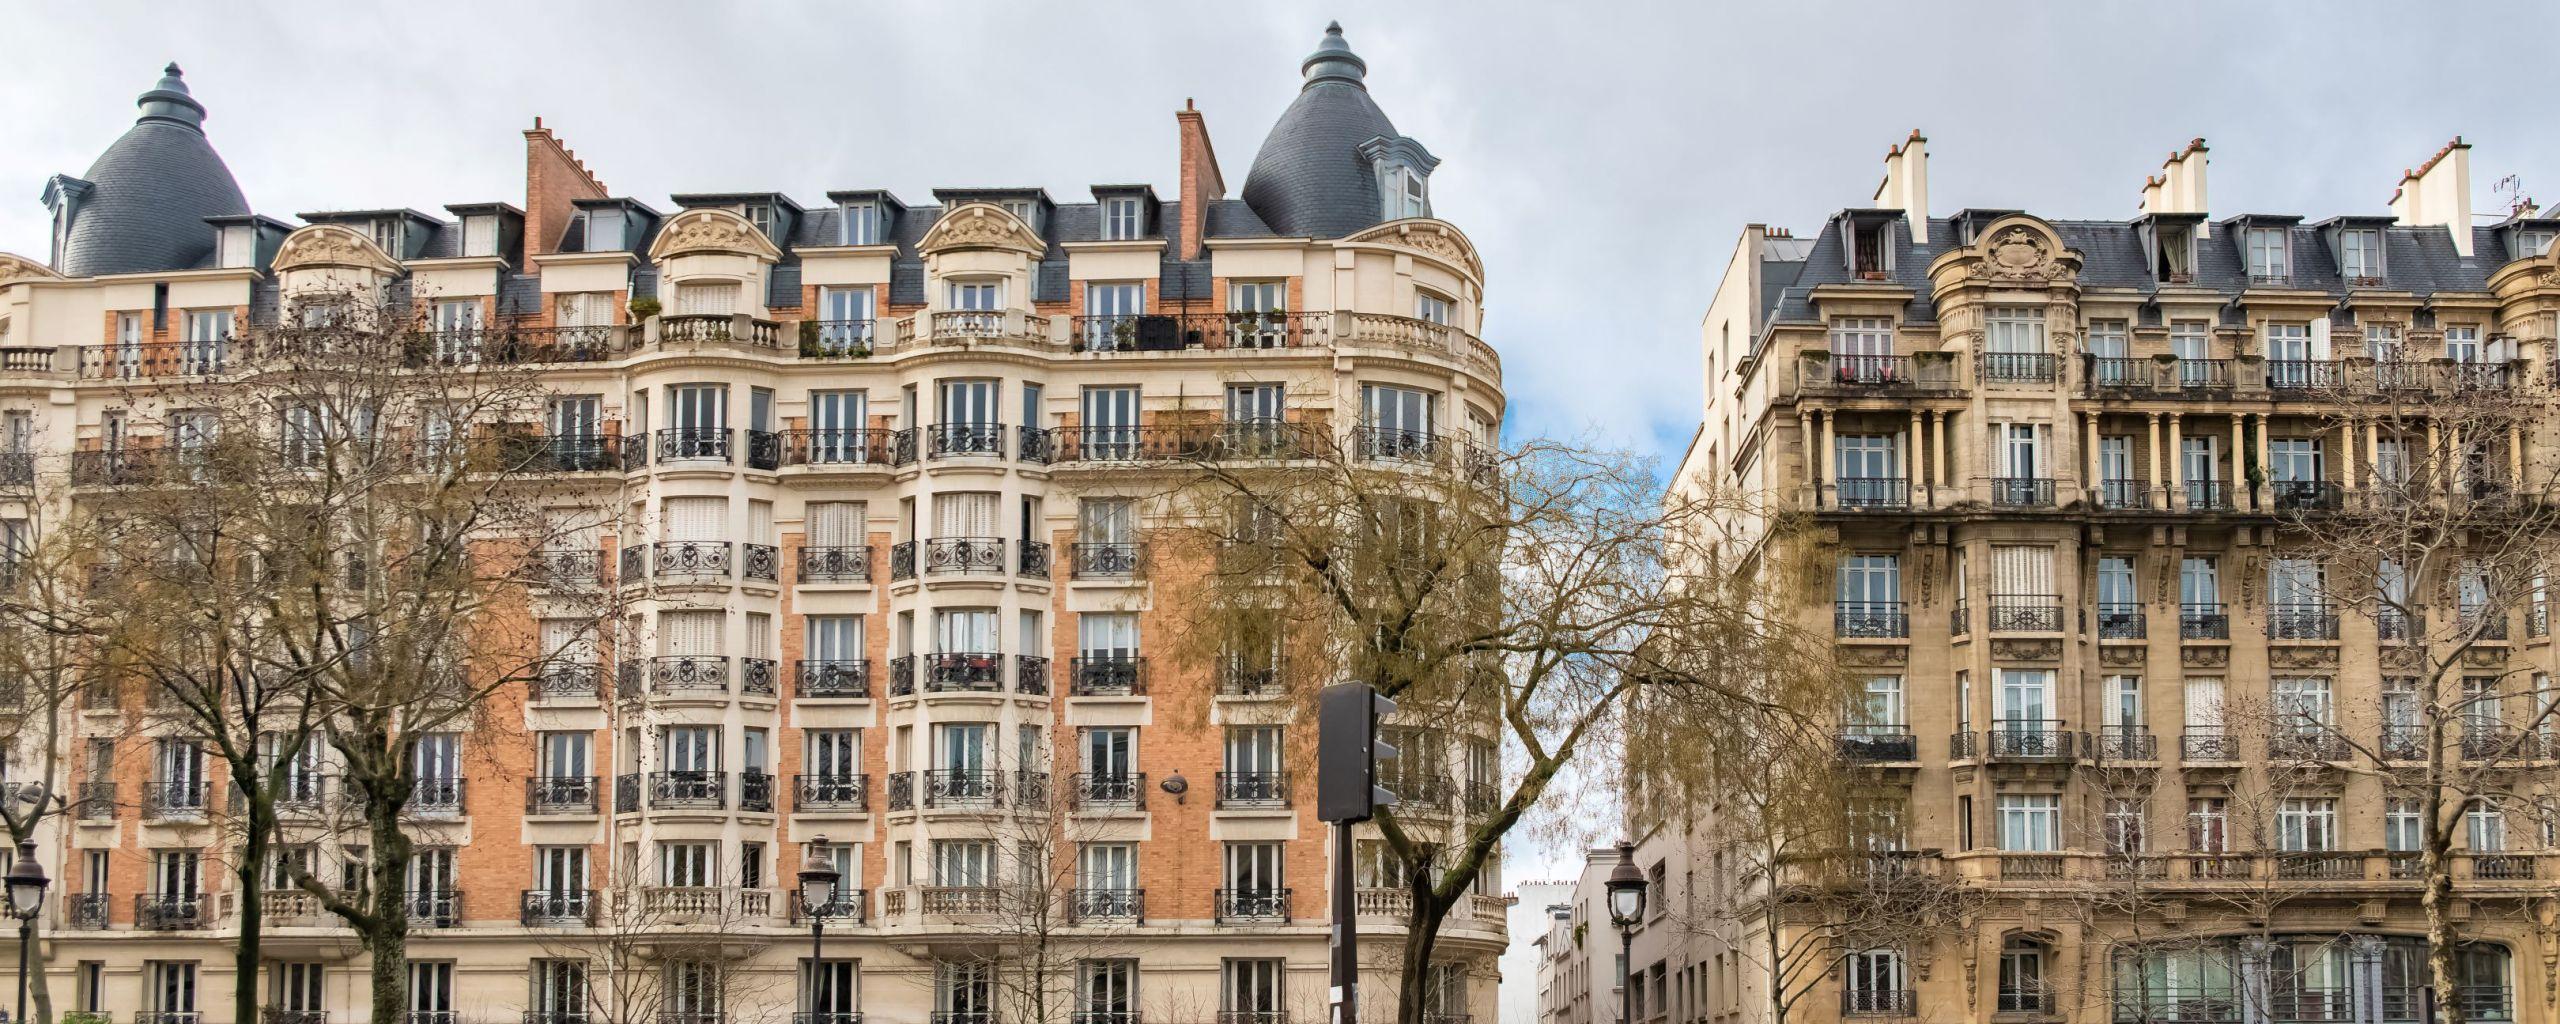 Típicas fachadas del Boulevard Richard Lenoir, ejemplo de la arquitectura parisina del s. XIX(Fuente: Shutterstock)